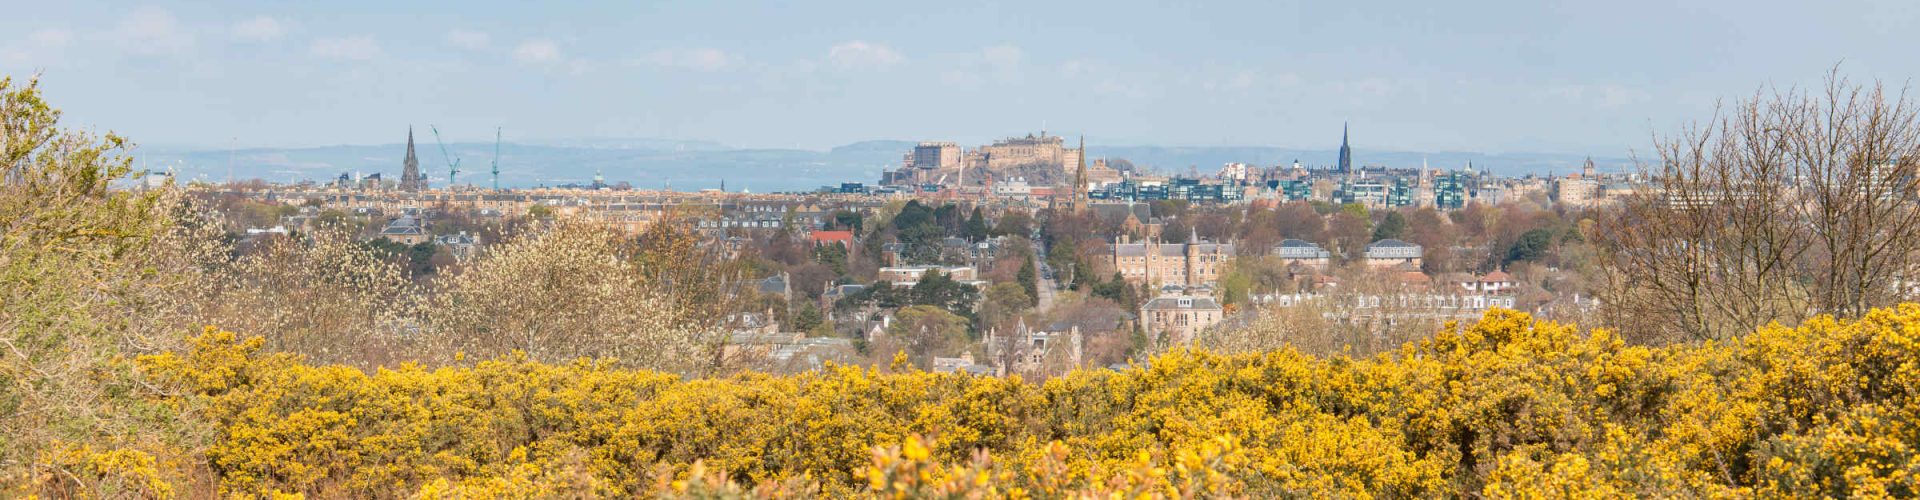 View over Edinburgh from Blackford Hill